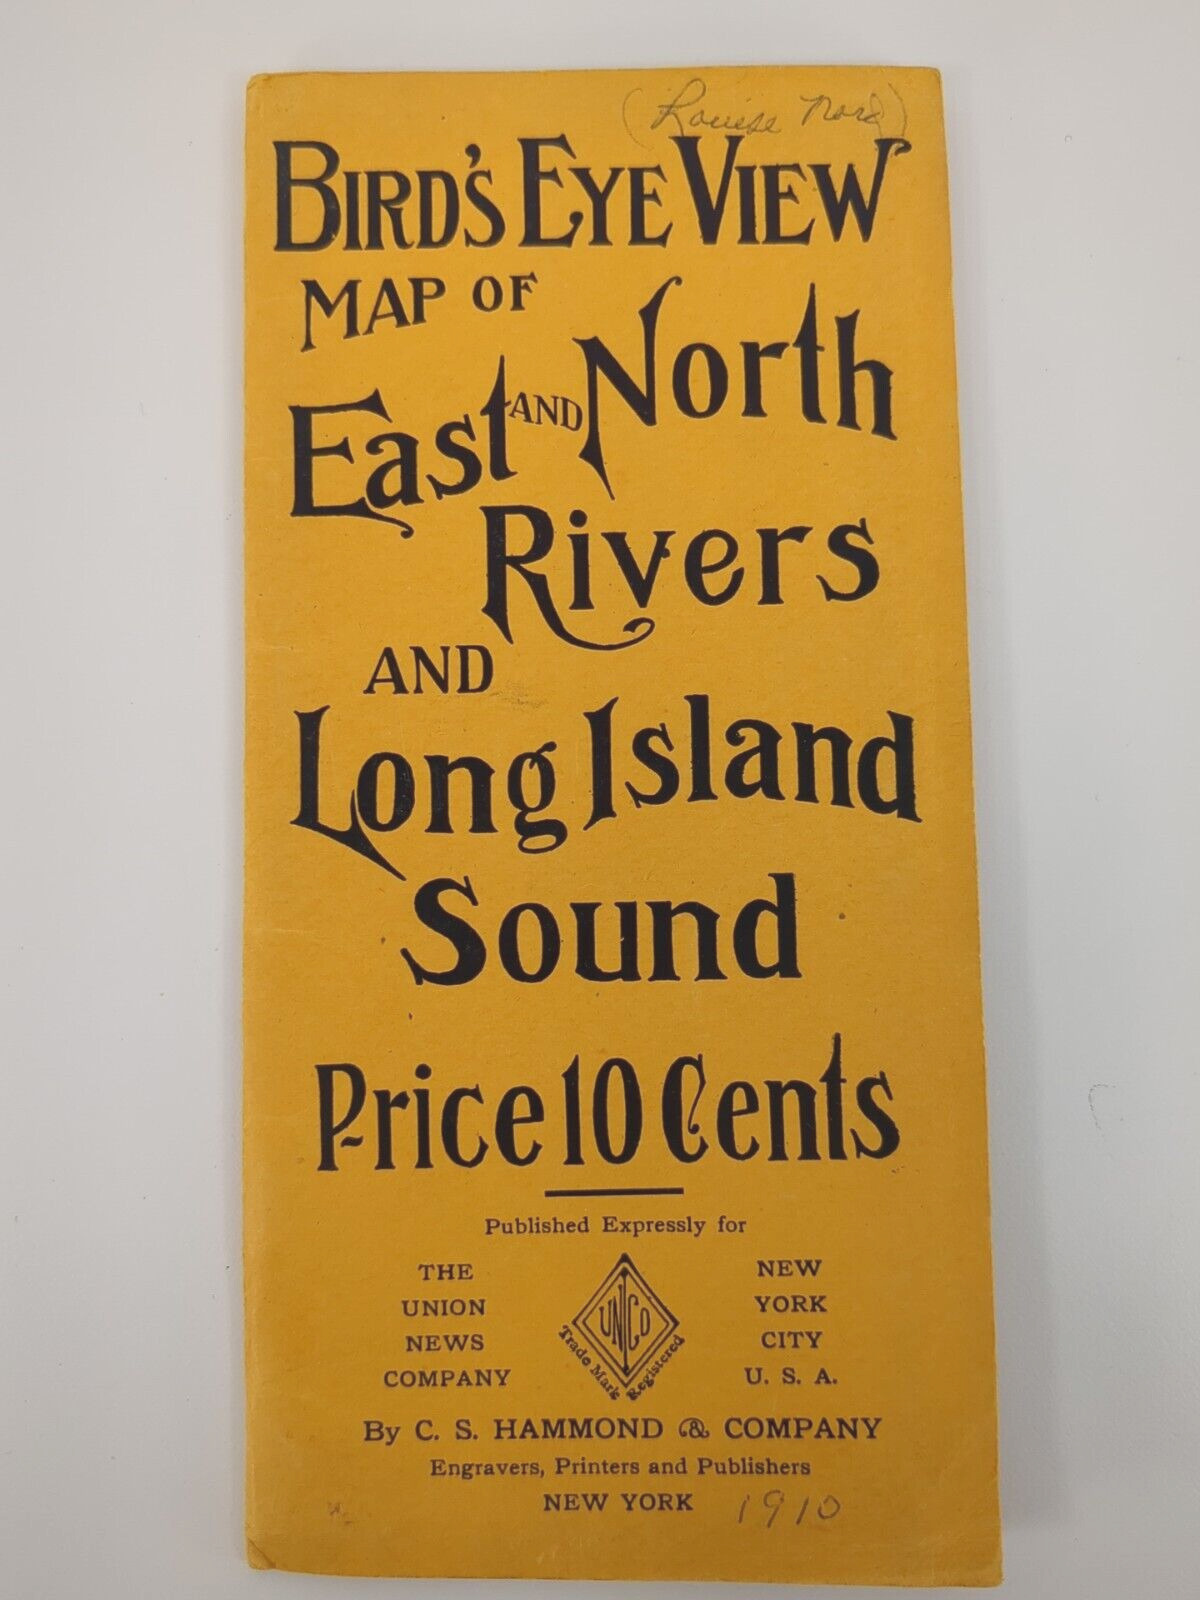 Long Island Sound Birds Eye View Map East North Rivers 1912 CS Hammond Foldout